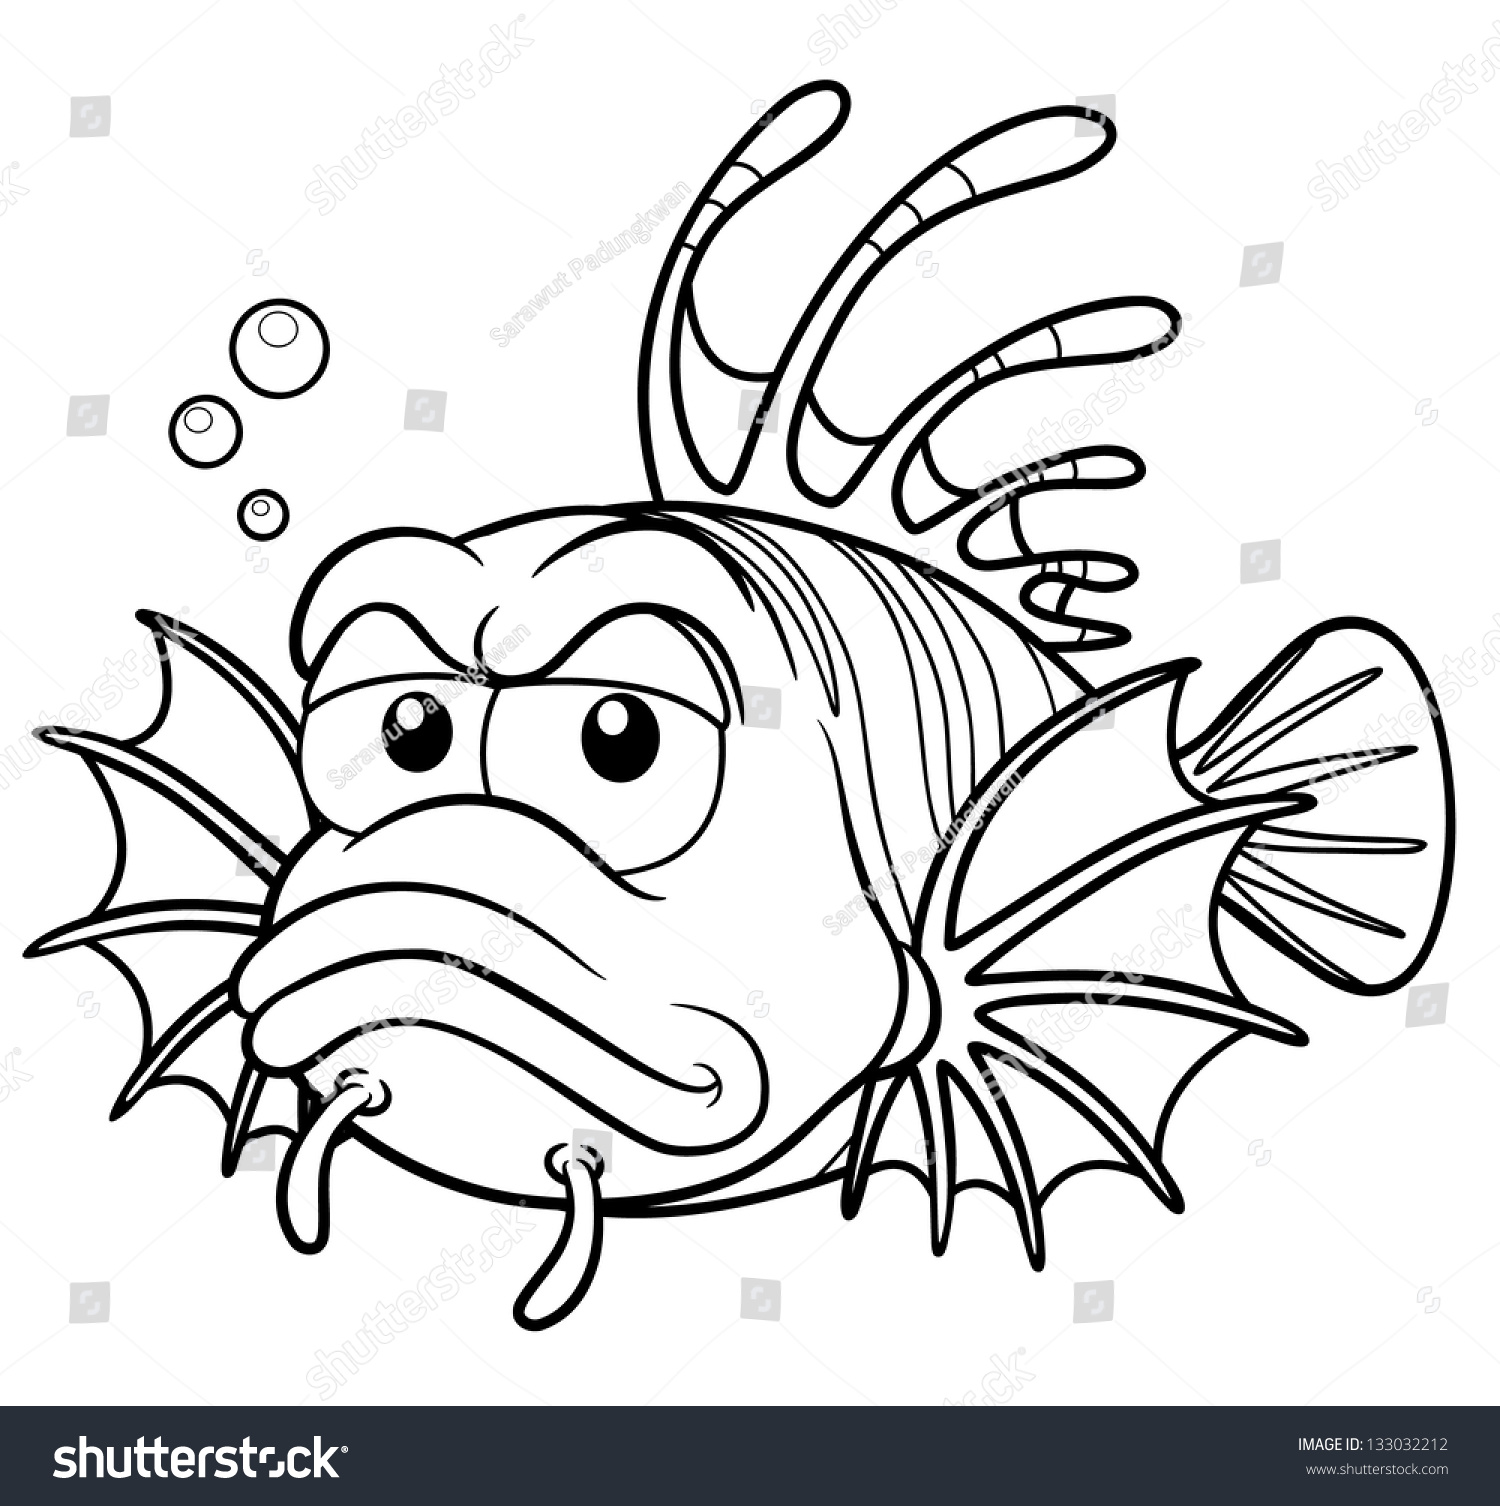 Download Vector Illustration Lionfish Cartoon Coloring Book Stock Vector (Royalty Free) 133032212 ...